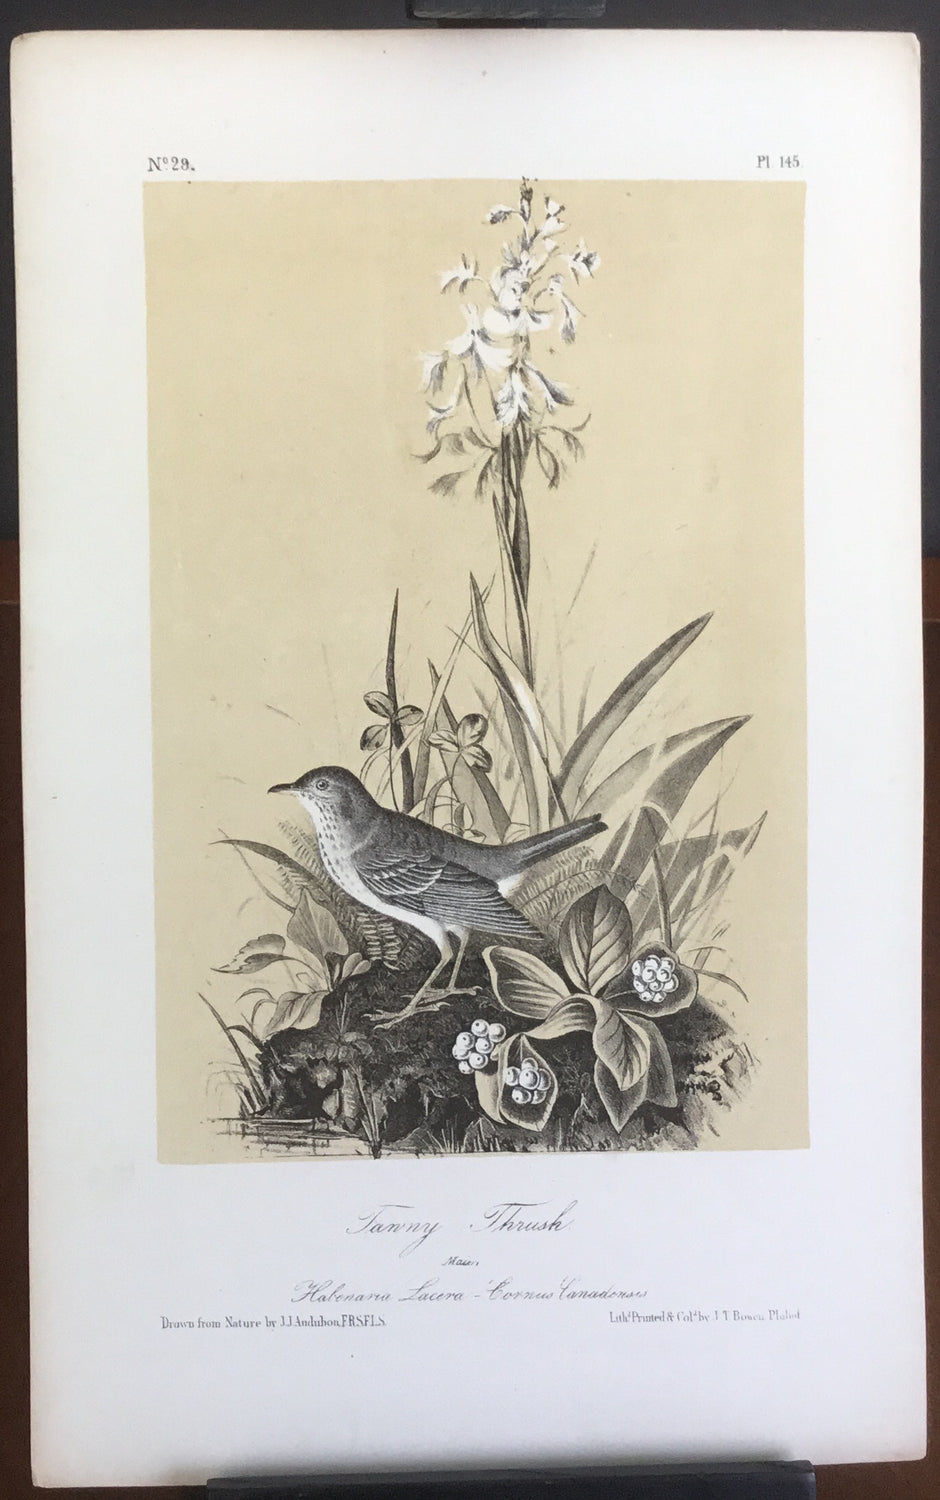 Audubon Octavo Tawny Thrush, plate 145, uncolored test sheet, 7 x 11